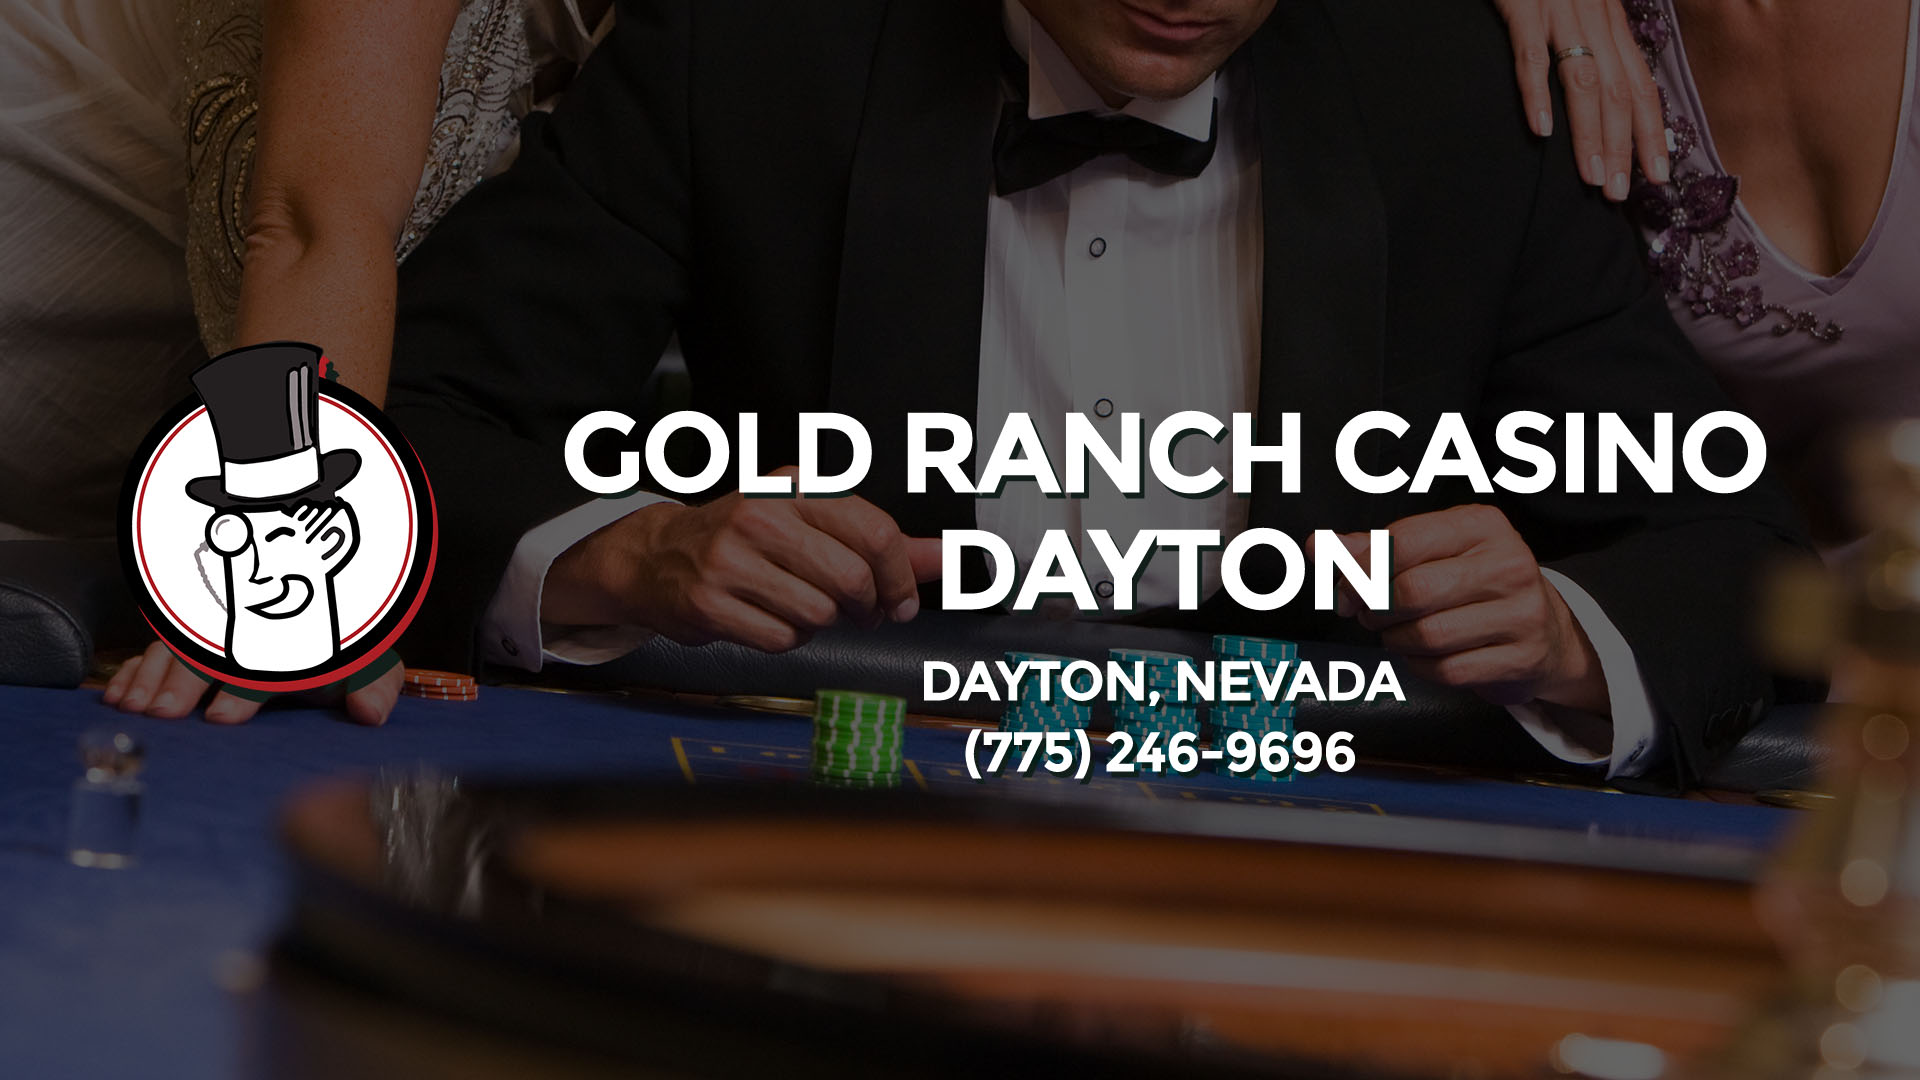 hollywood casino dayton online derby bettign